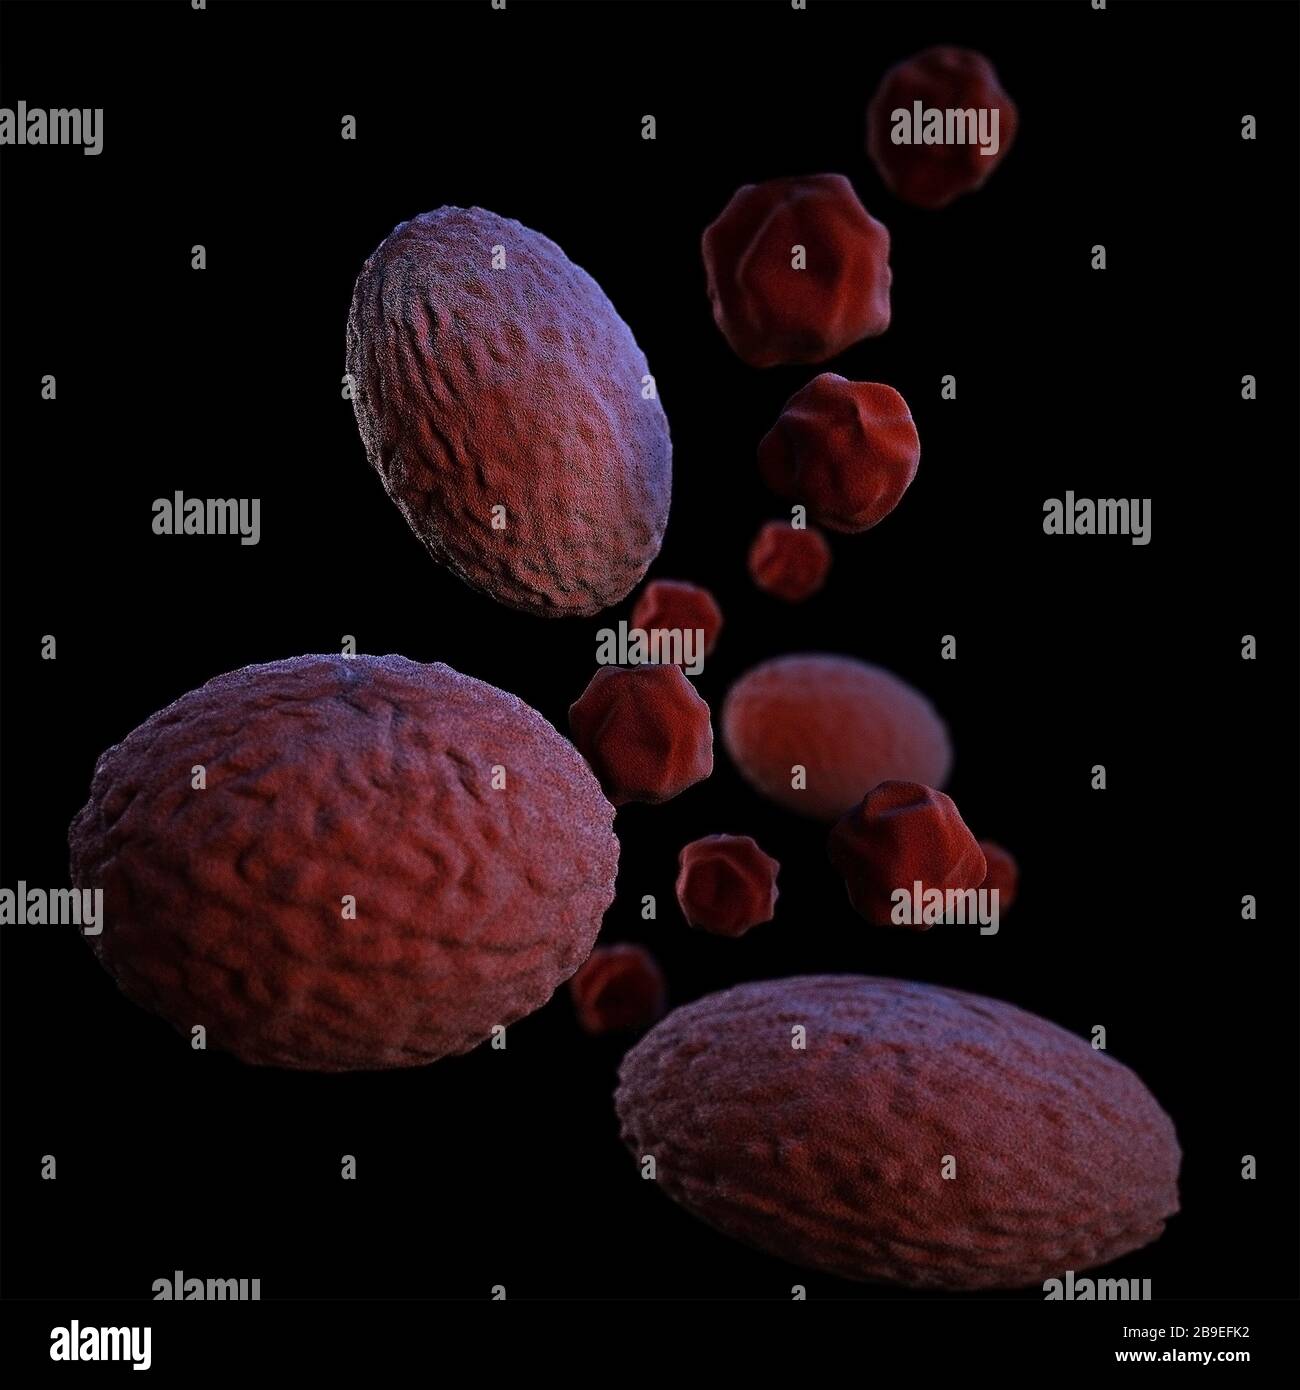 3D illustration the Chlamydia psittaci bacteria. Stock Photo